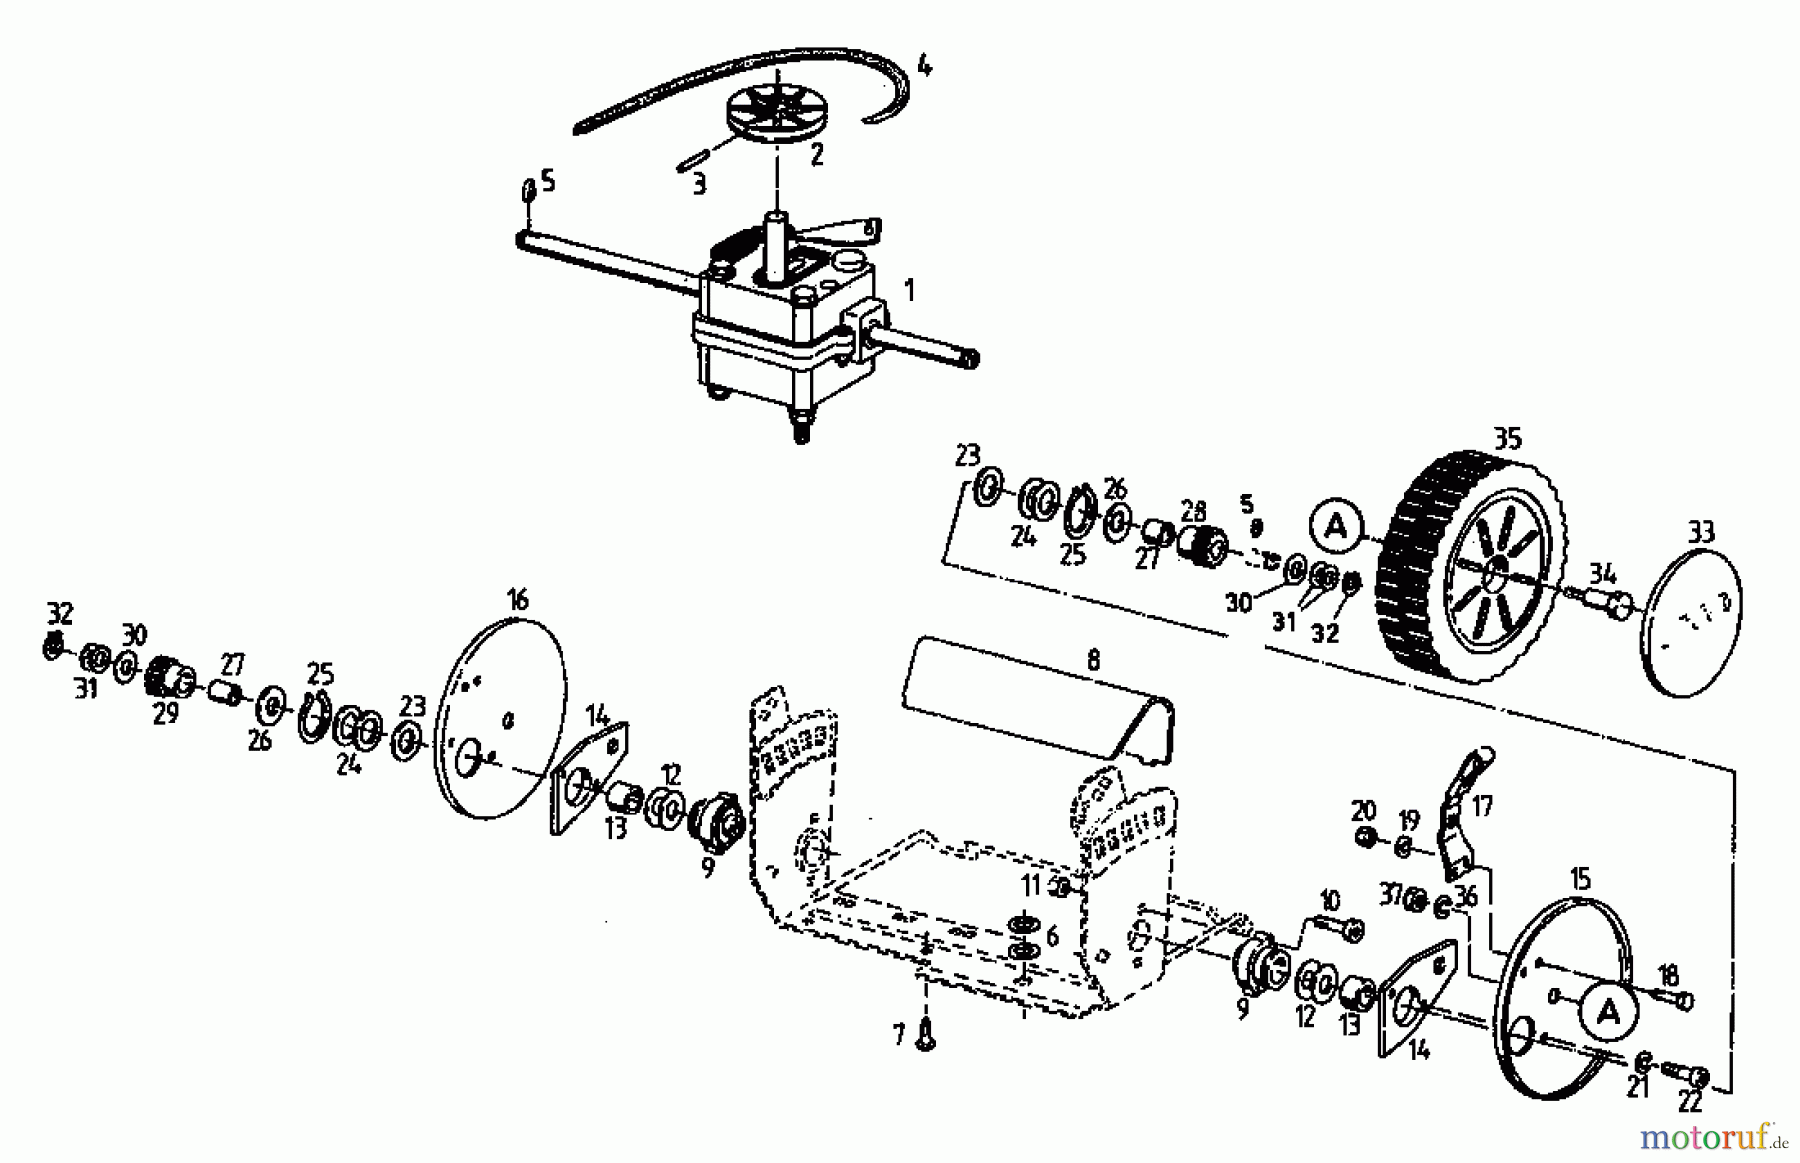  Golf Petrol mower self propelled BRL 5 04054.03  (1996) Gearbox, Wheels, Cutting hight adjustment